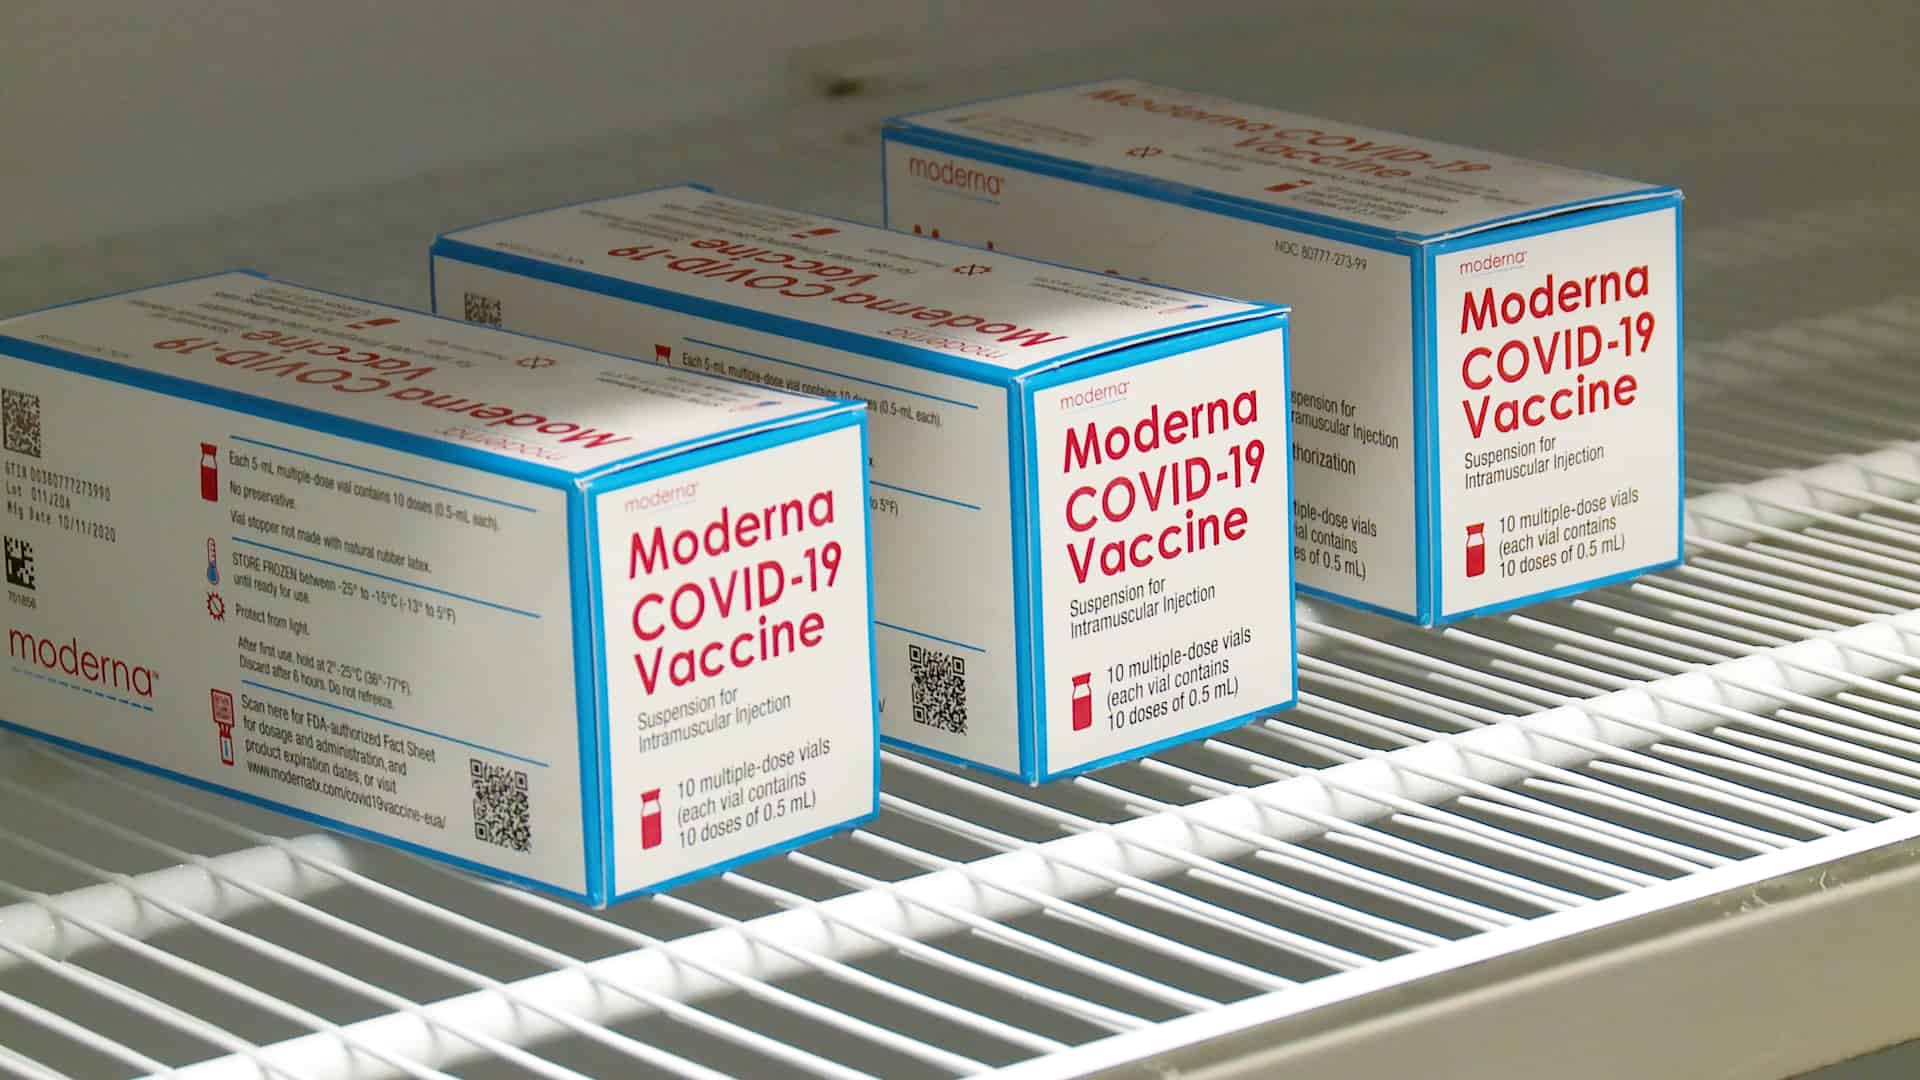 SRPMIC Receives the Moderna COVID-19 Vaccine